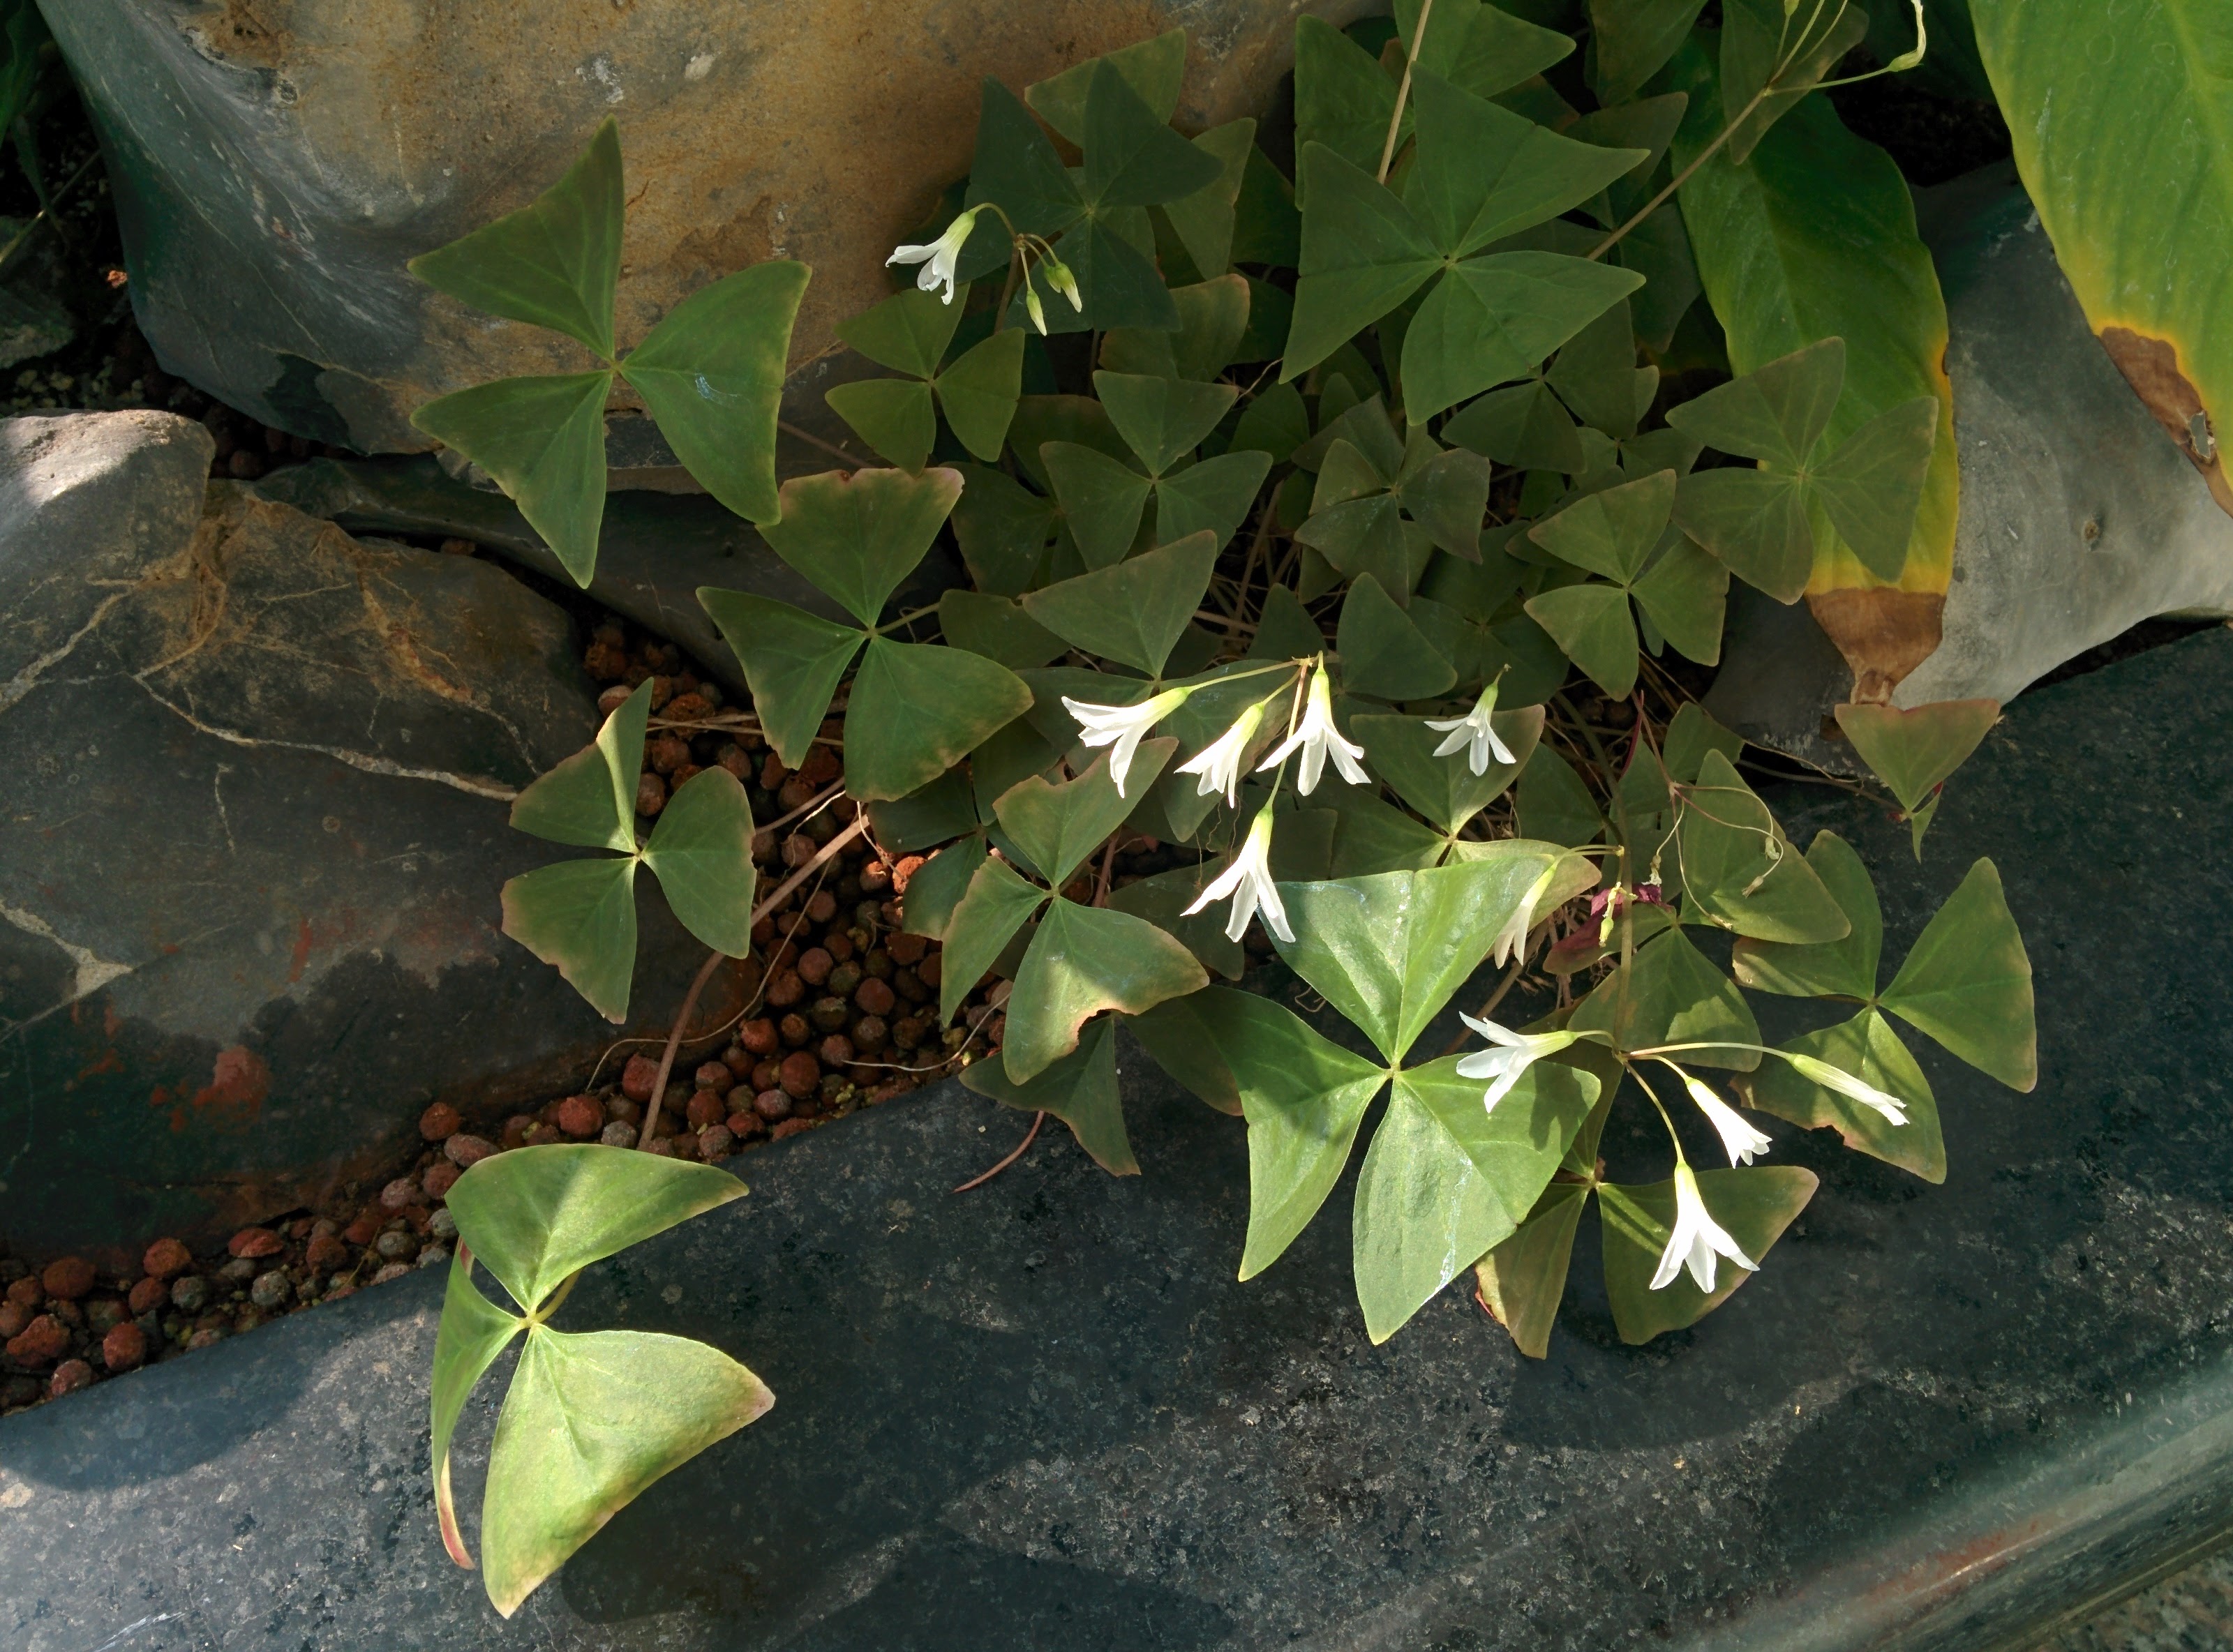 IMG_20151201_122513.jpg 하얀색 꽃이 핀 클로버를 닮은 삼각형 잎의 조경식물...사랑초(Oxalis triangularis subsp. papilionacea)